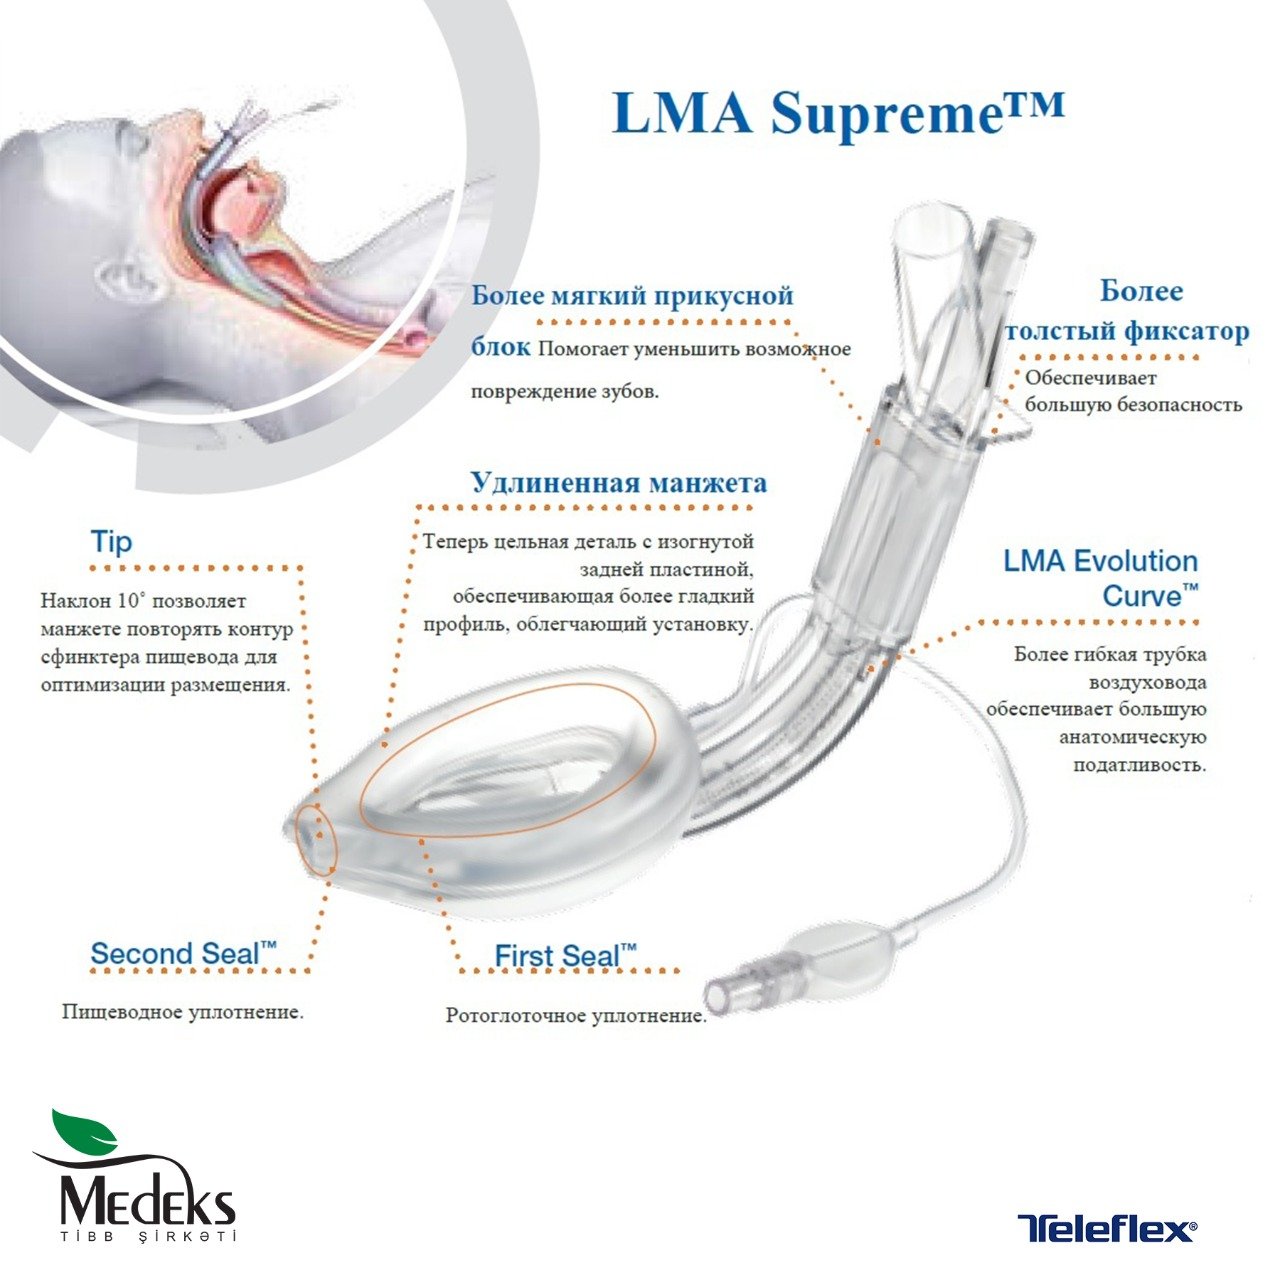 LMA Supreme™  Emergency Medical Products